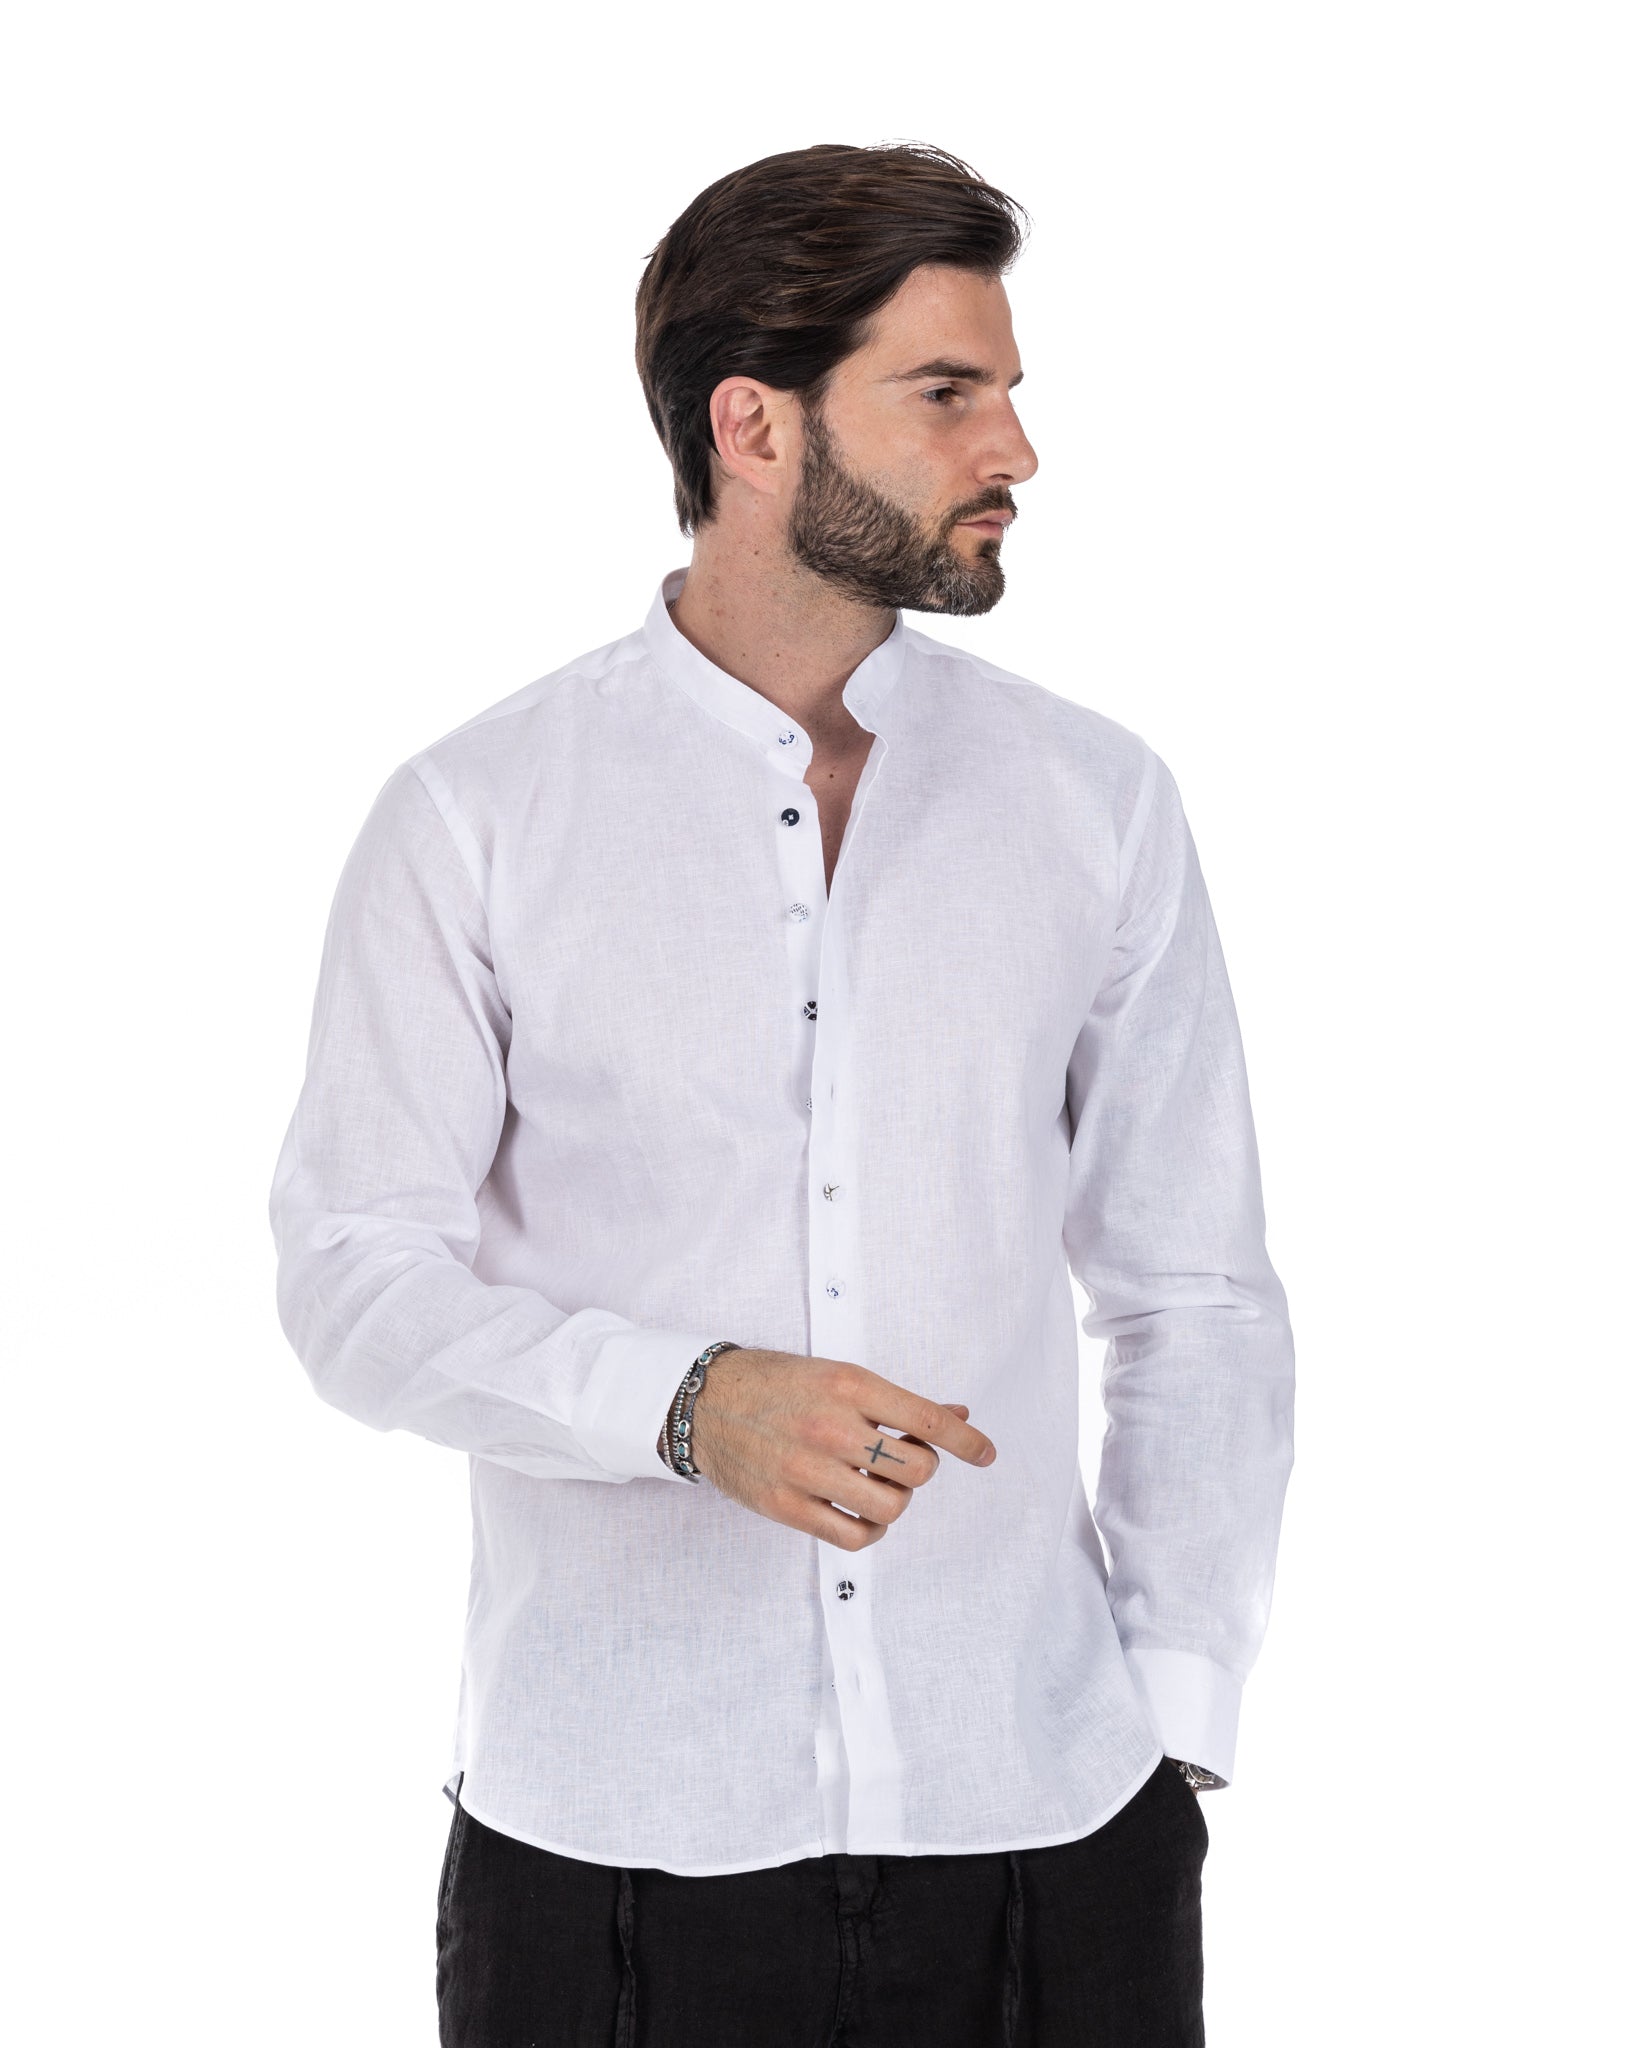 Positano - white linen Korean shirt